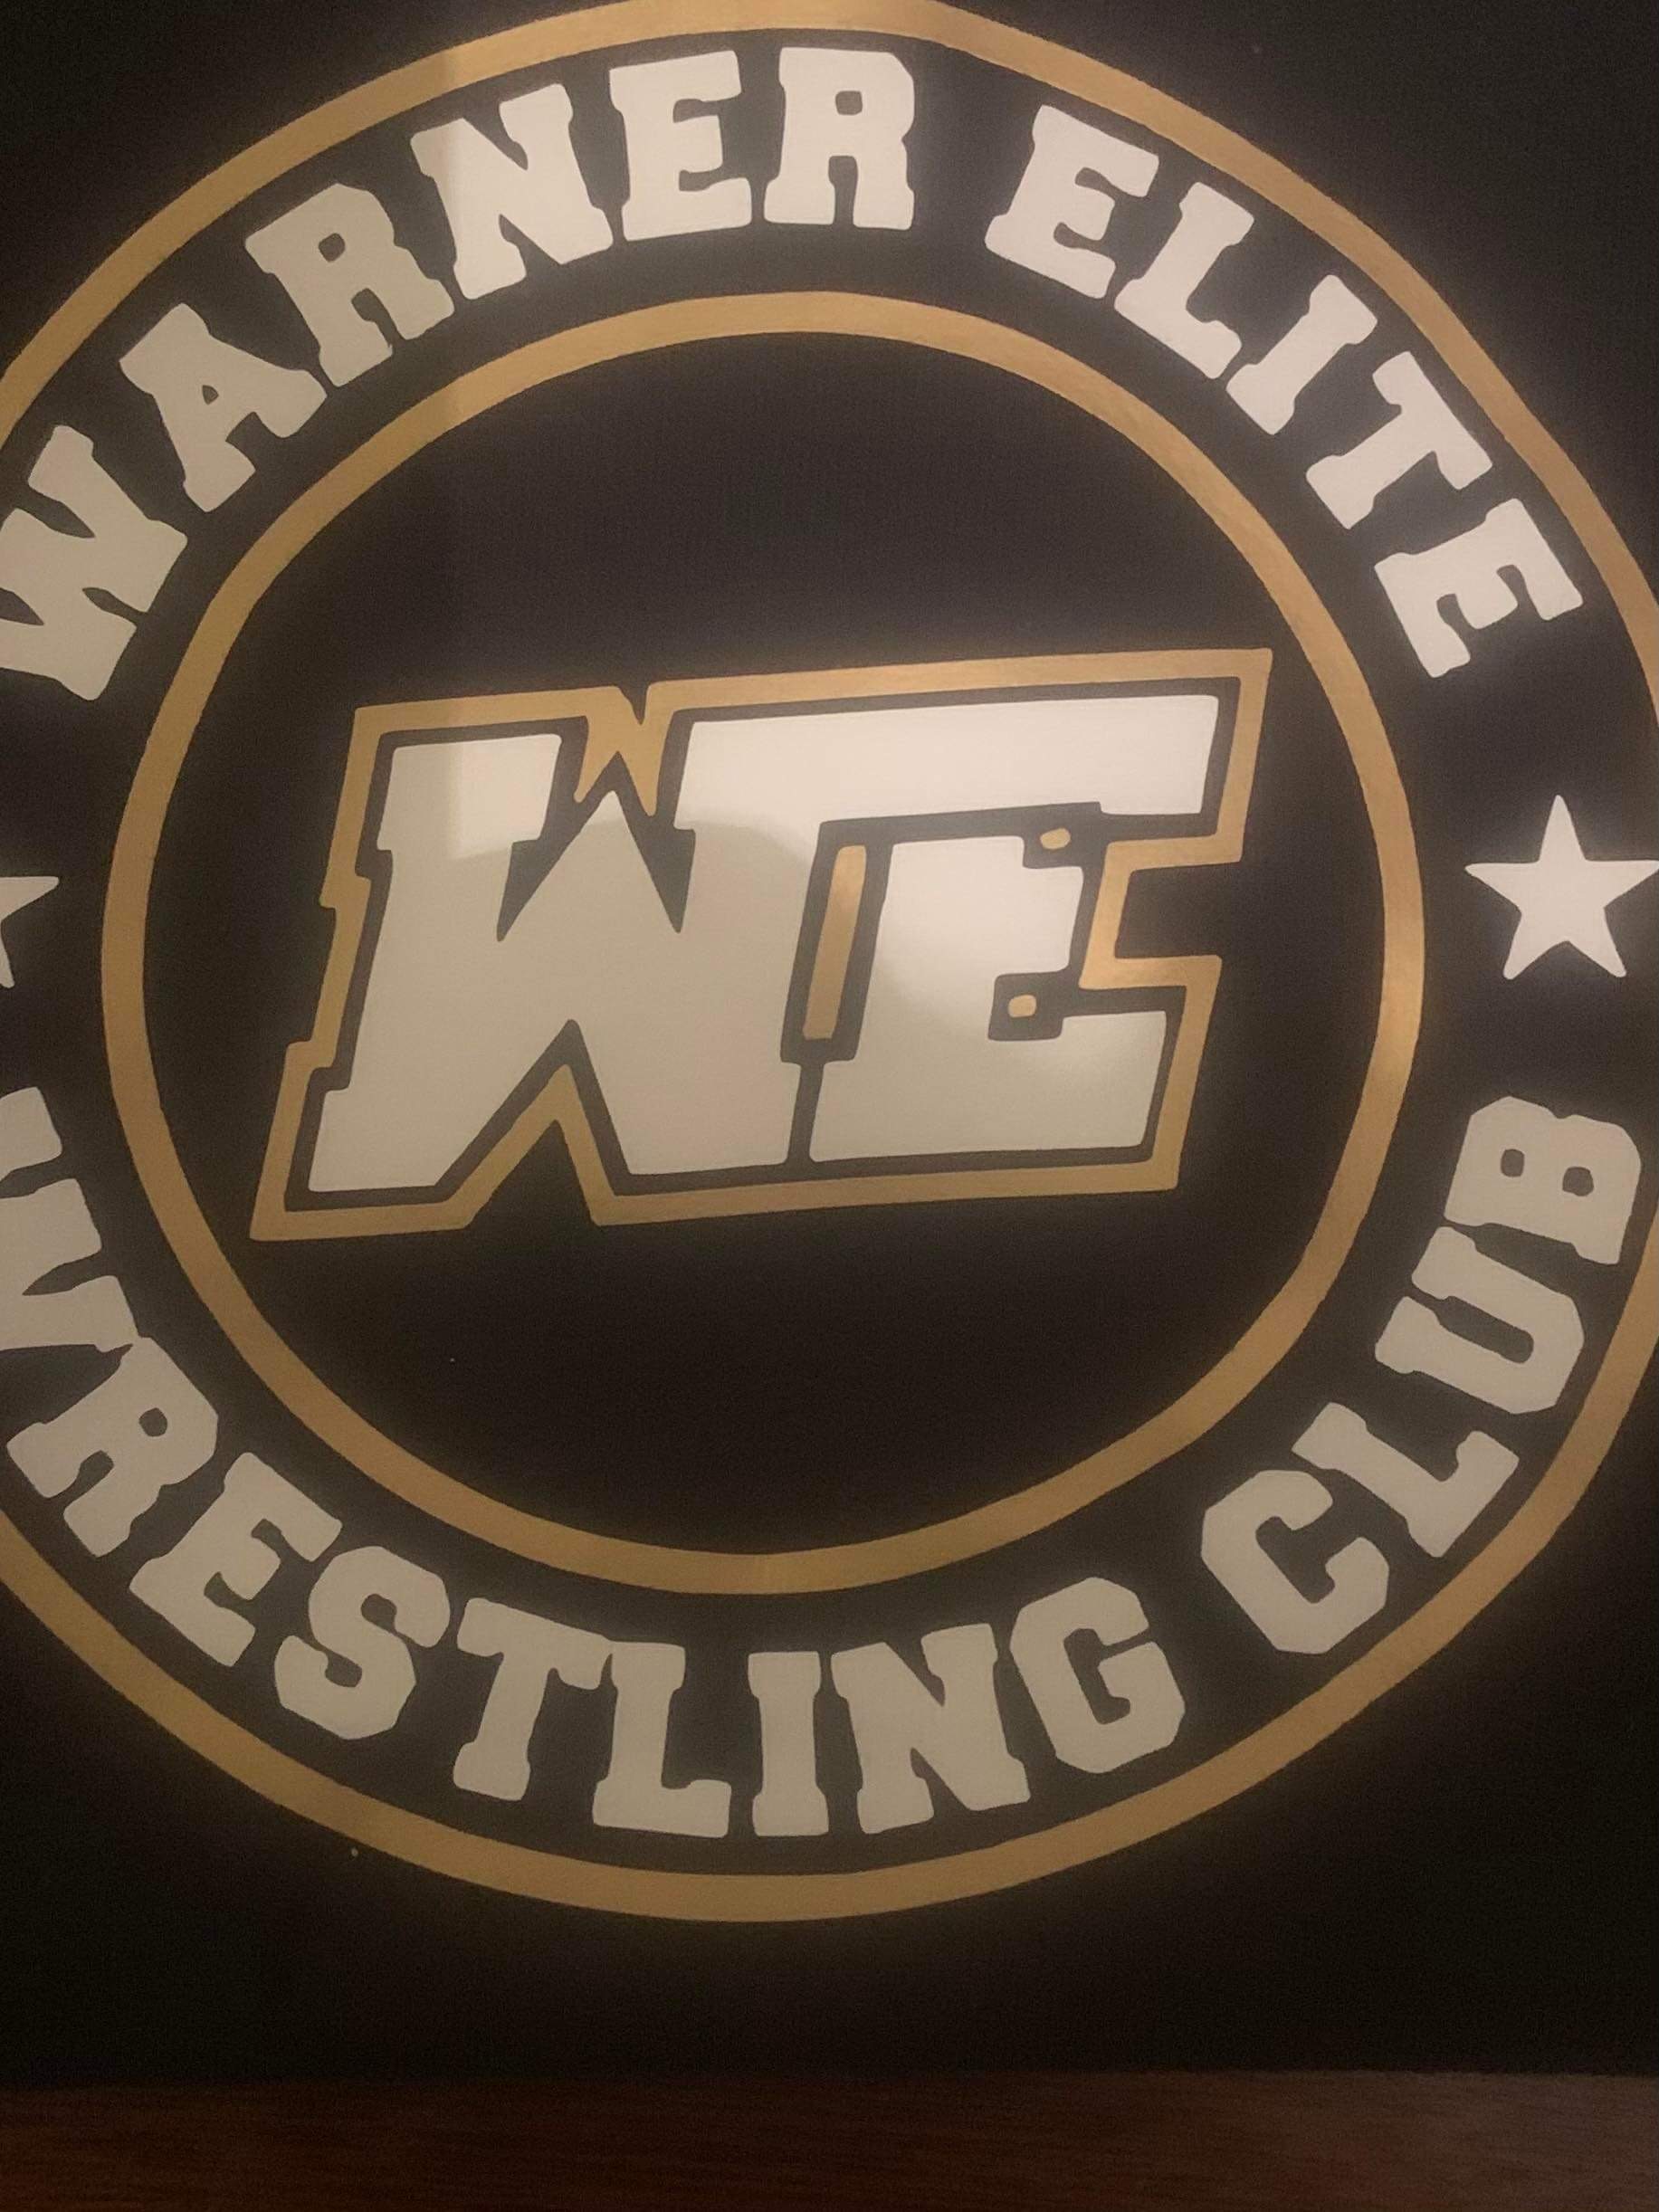 Warner Elite Wrestling Club